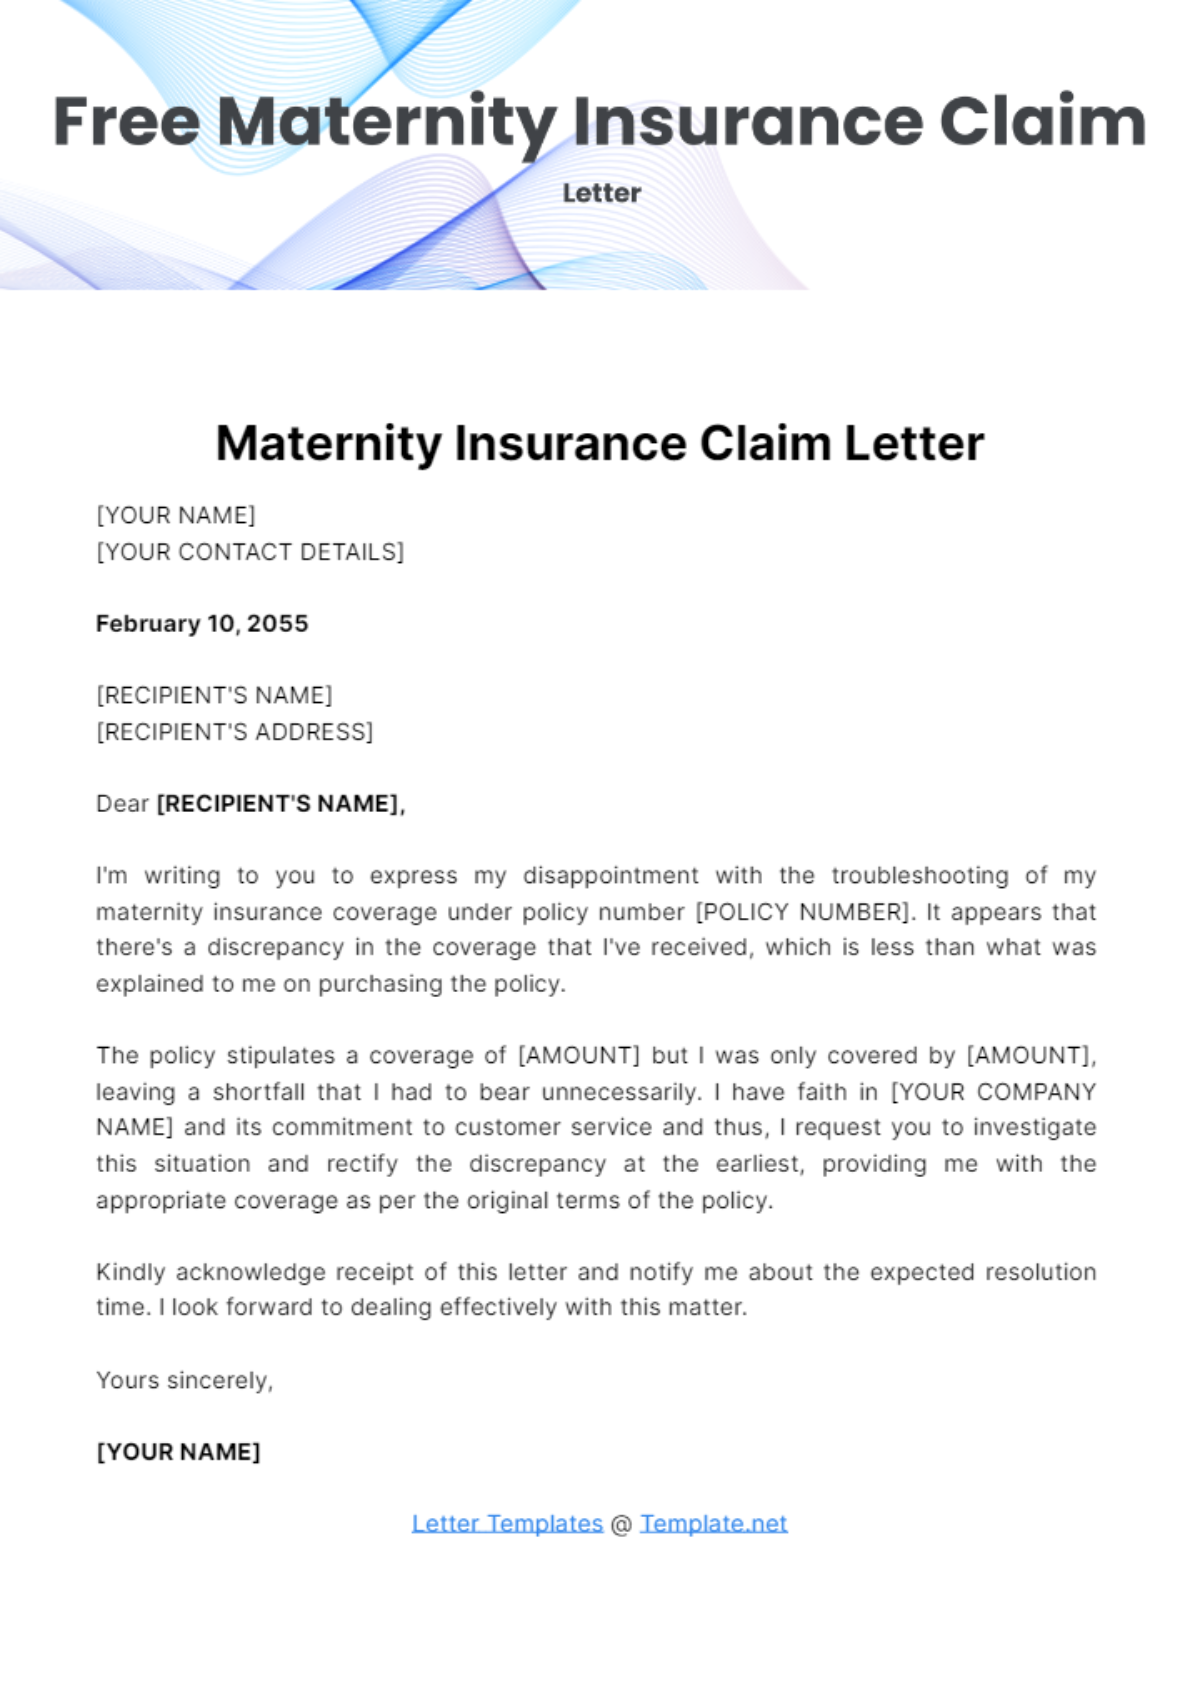 Maternity Insurance Claim Letter Template